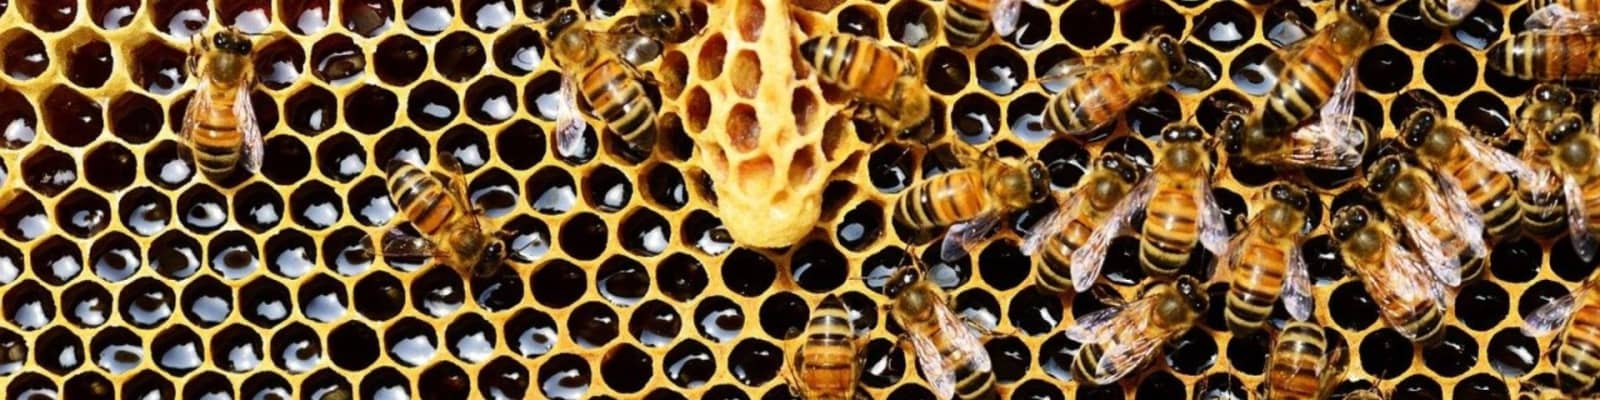 bee removals in Alberton